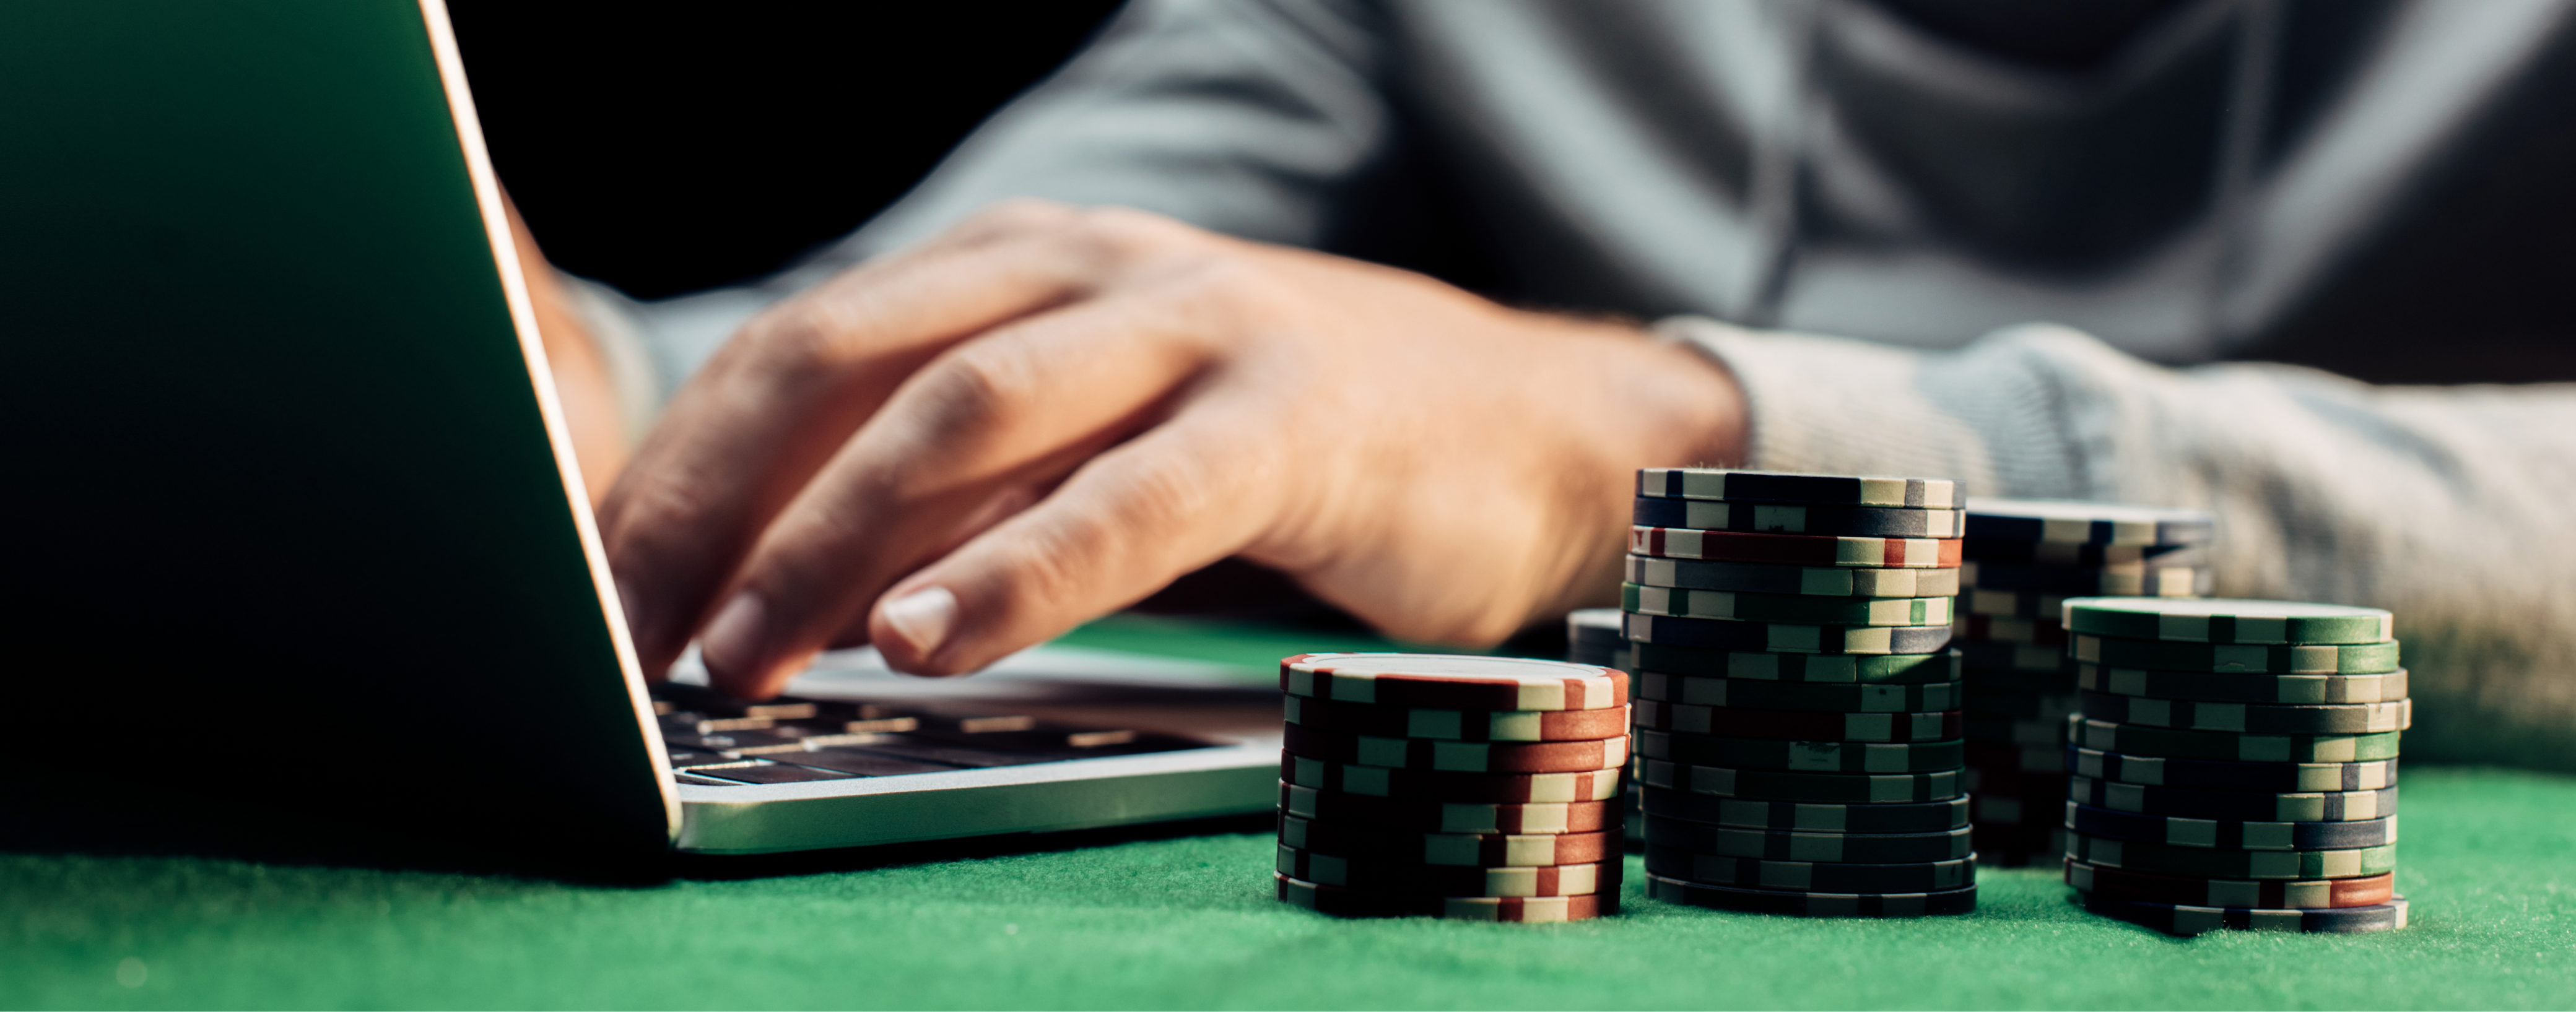 Online gambling fraud: Betting on identity verification